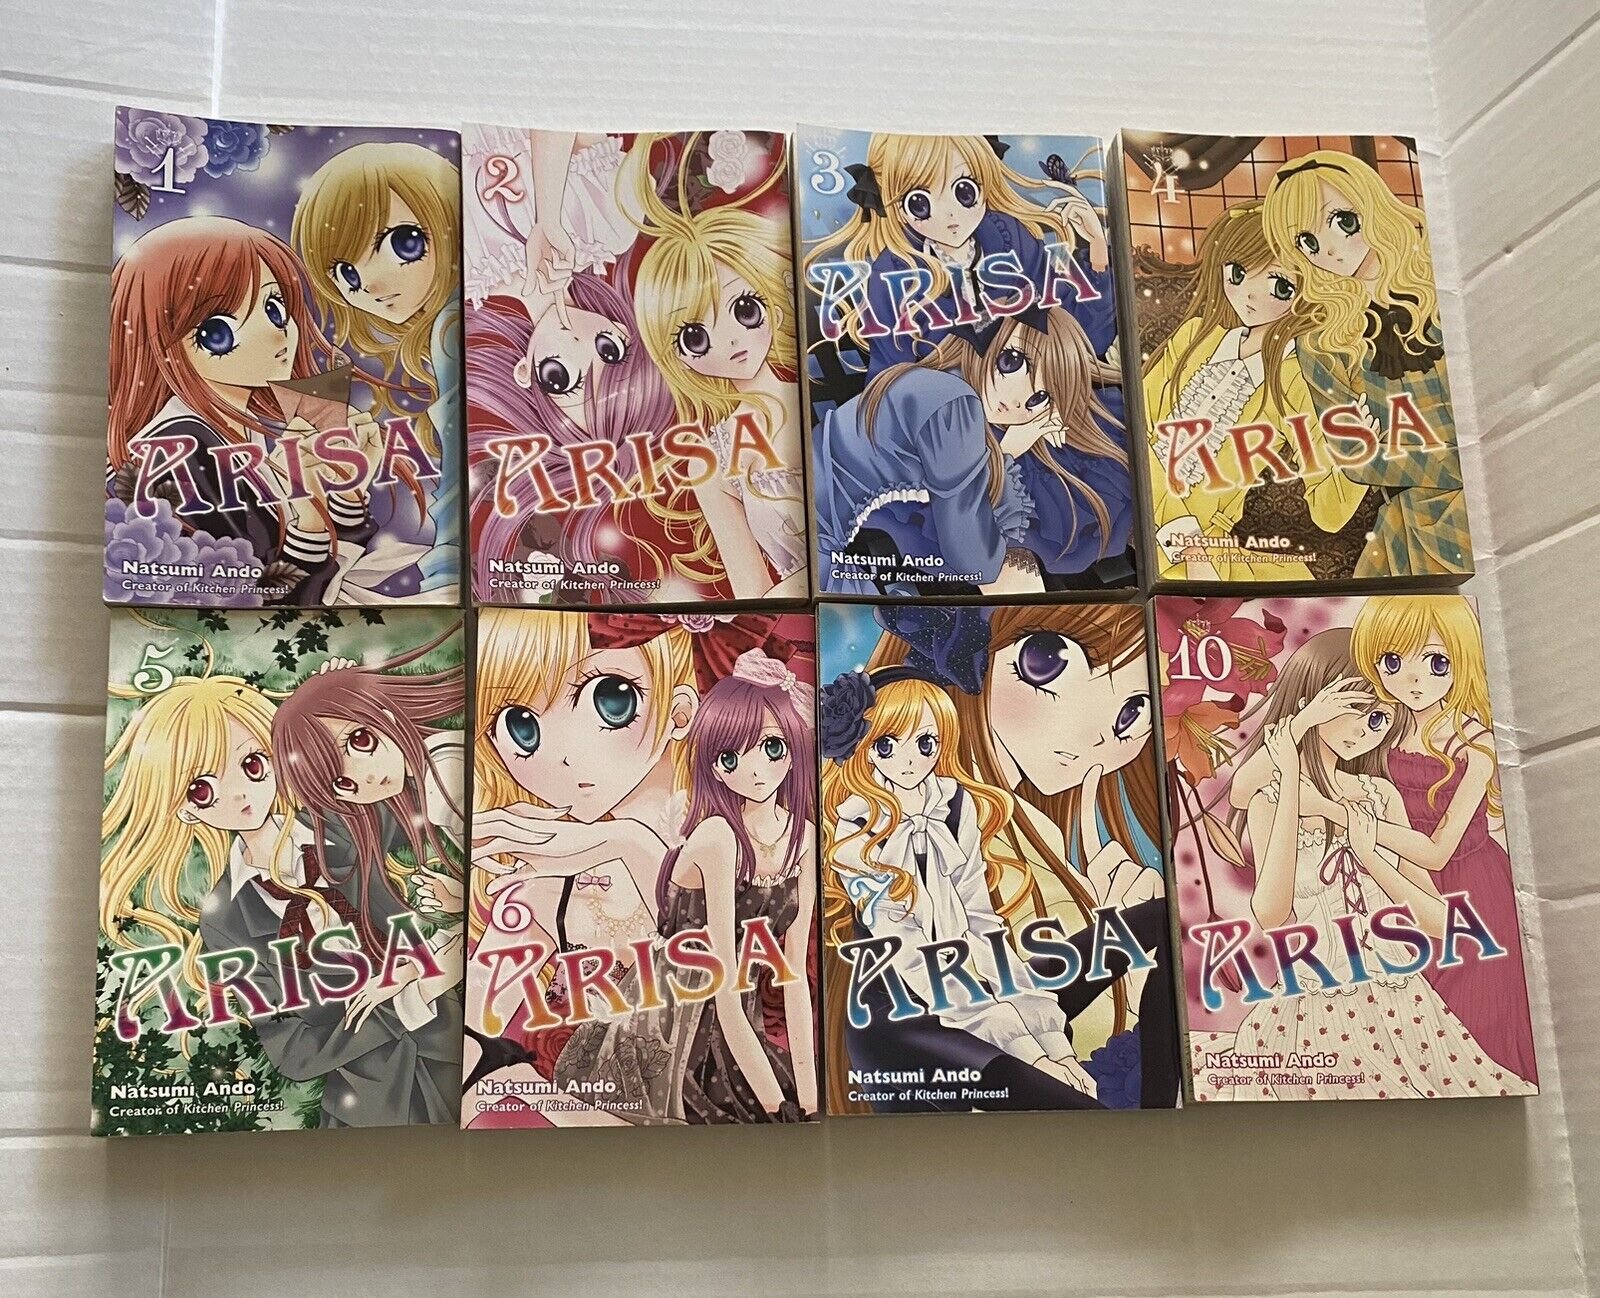 Arisa 1-7, 10 Natsumi Ando PB English Graphic Novel Manga 8 Books Lot Kodansha